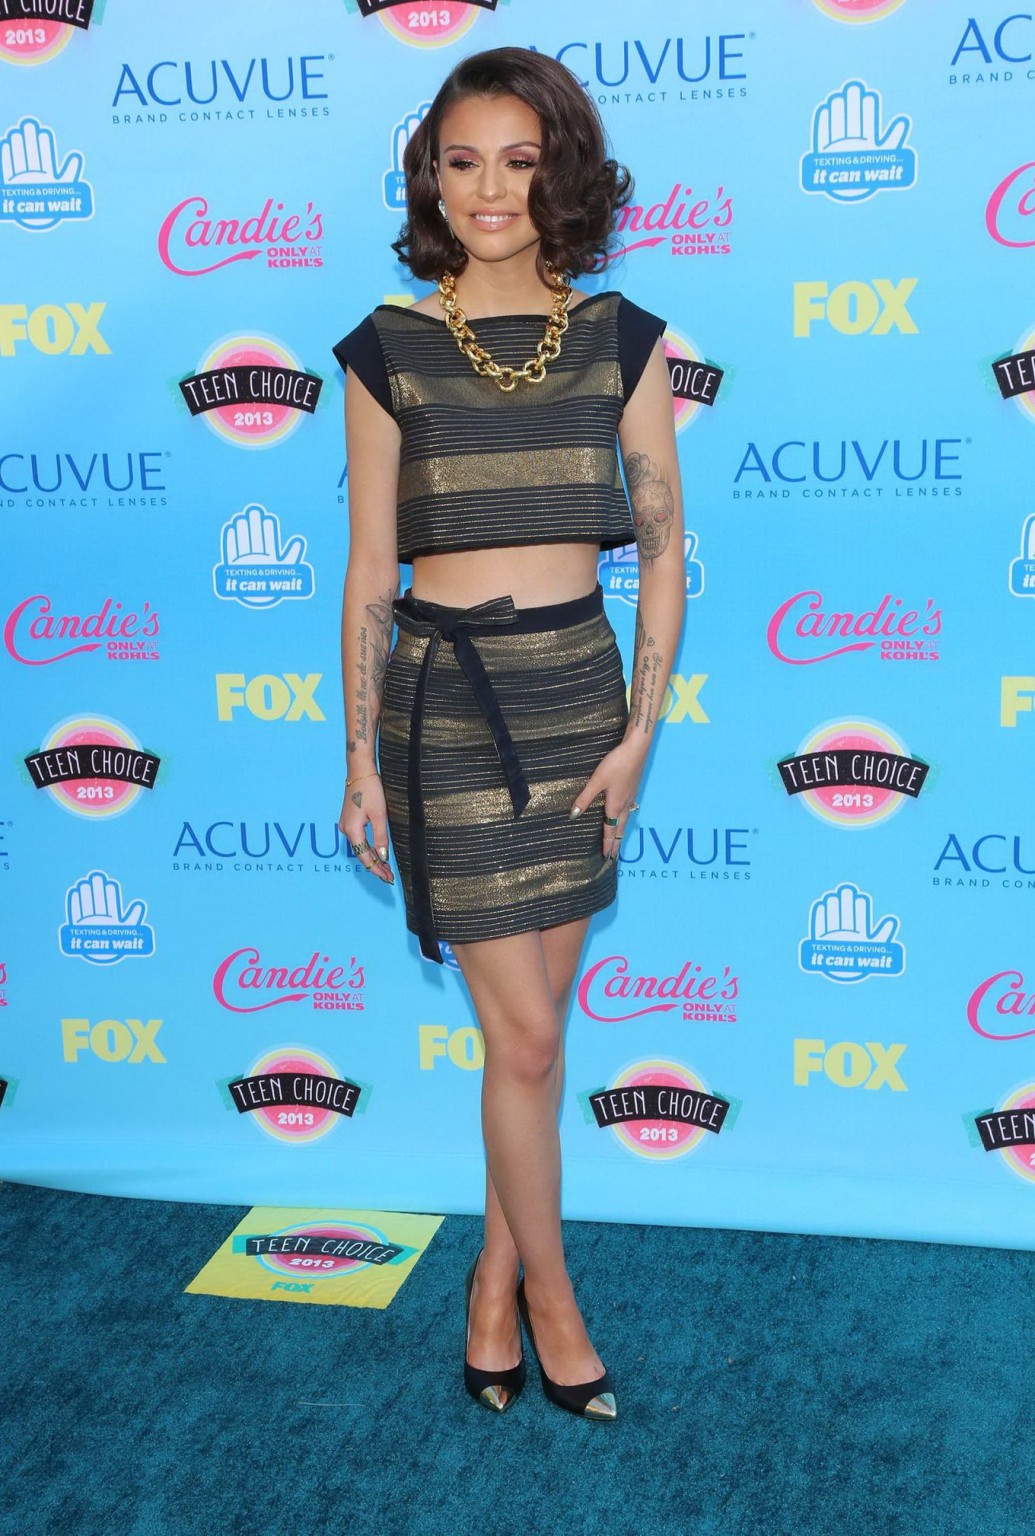 Cher lloyd indossa top a strisce lucide sulla pancia e mini gonna al 2013 teen choice aw
 #75221616